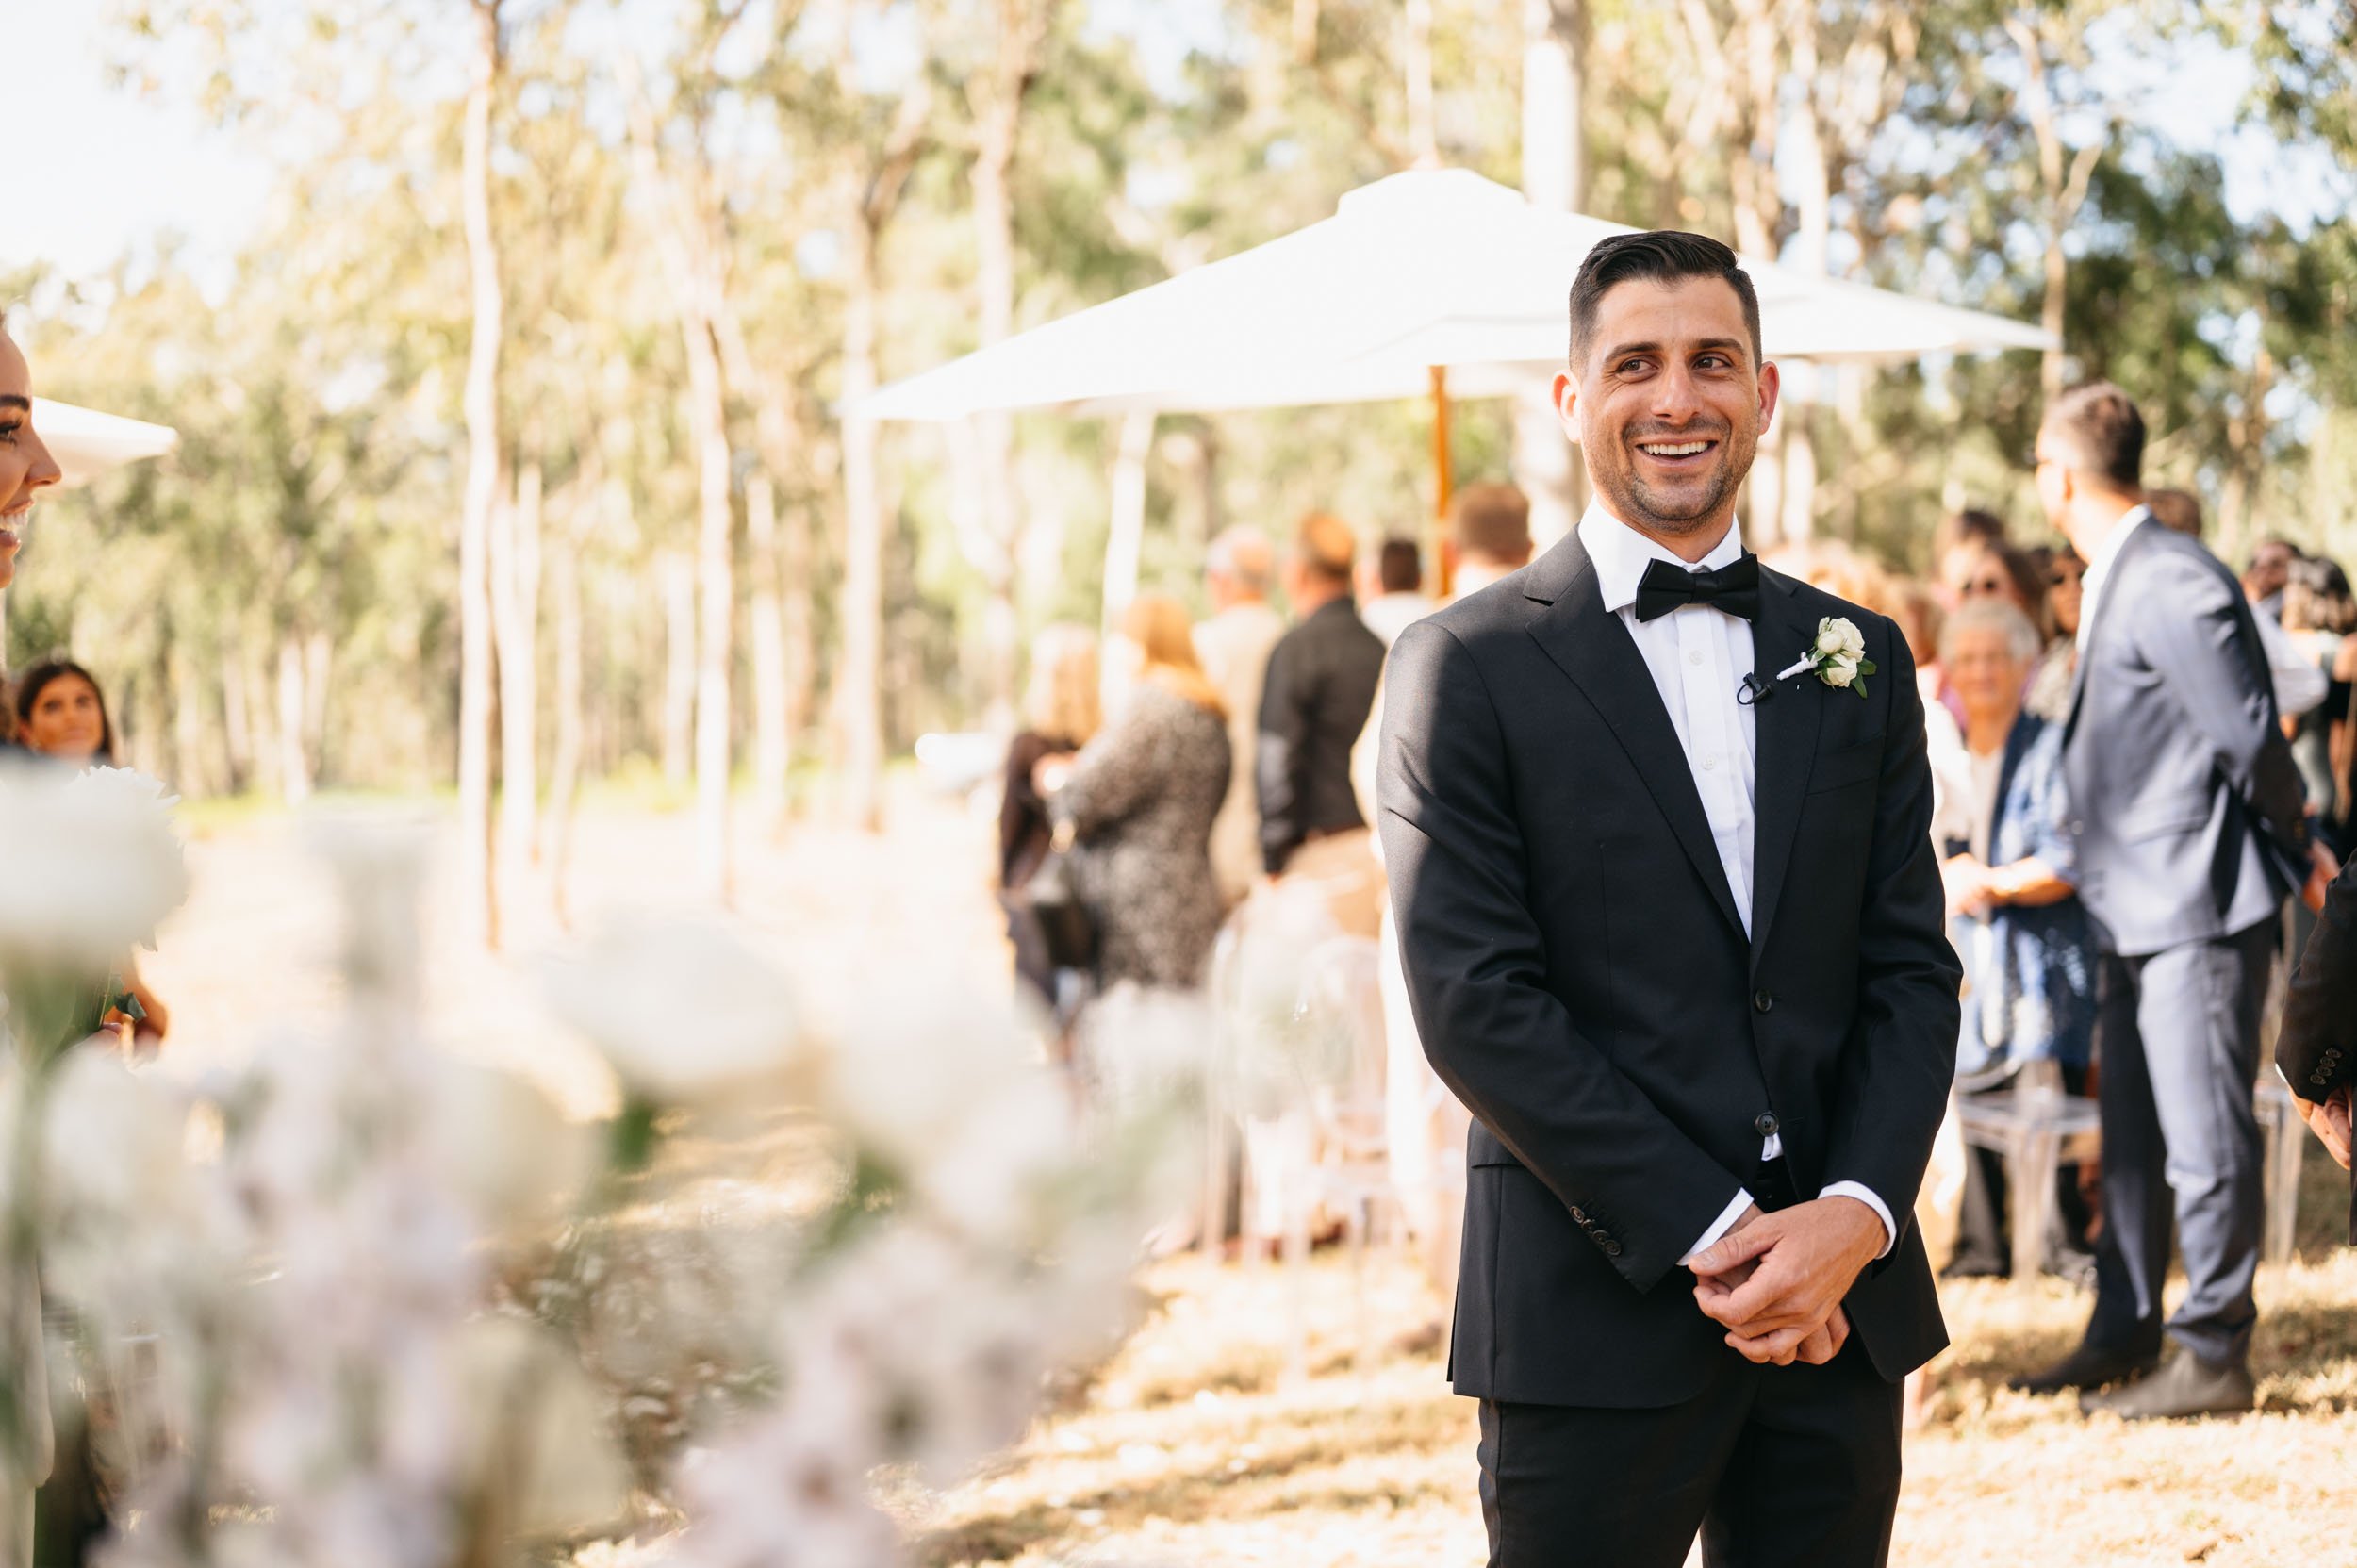 The Raw Photographer - Cairns Wedding Photographer - Mareeba Tablelands - Queensland photography - Kyha dress - luxury-18.jpg